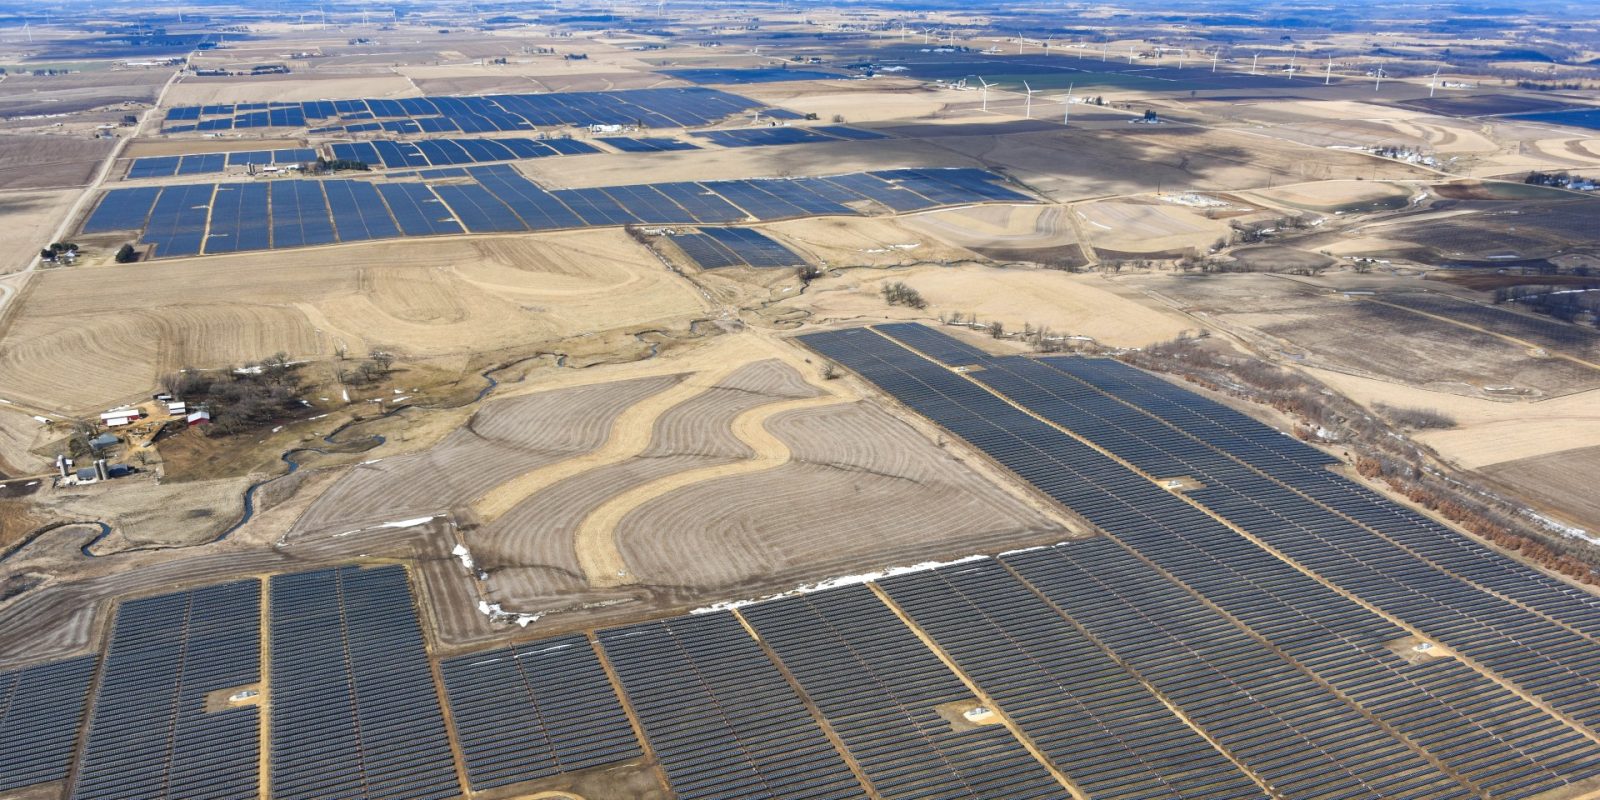 Wisconsin's largest solar farm